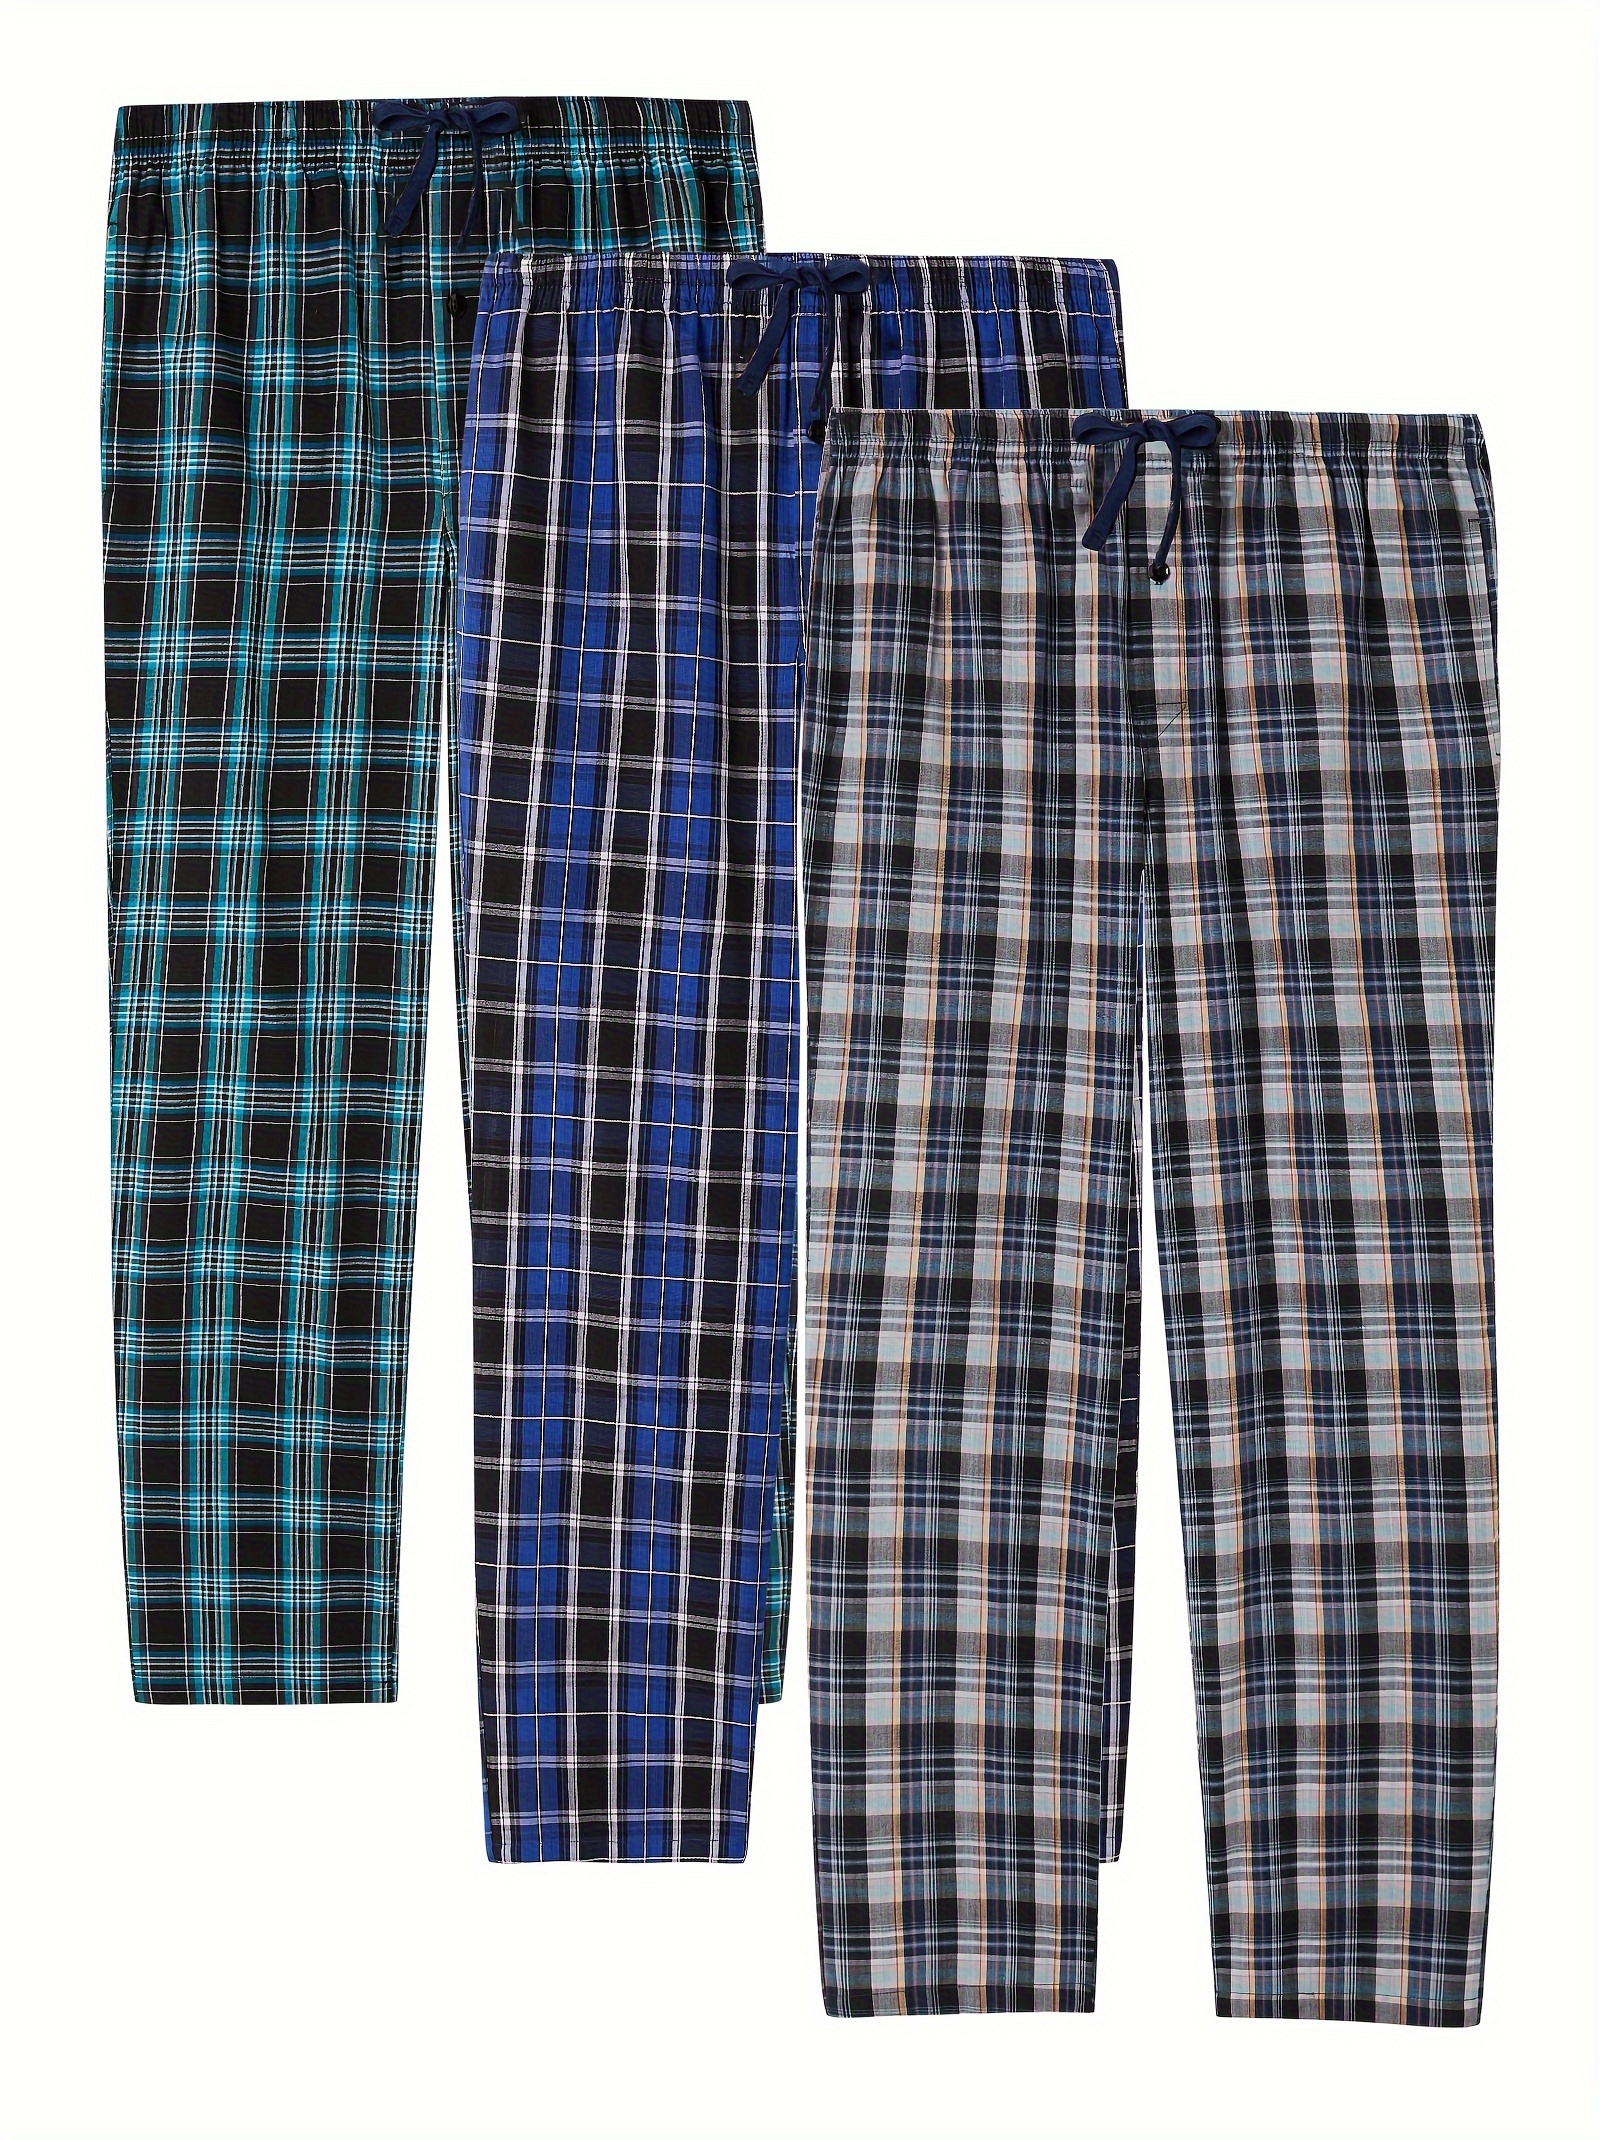 Autumn Winter Men's Cotton Pajamas Letter Striped Sleepwear